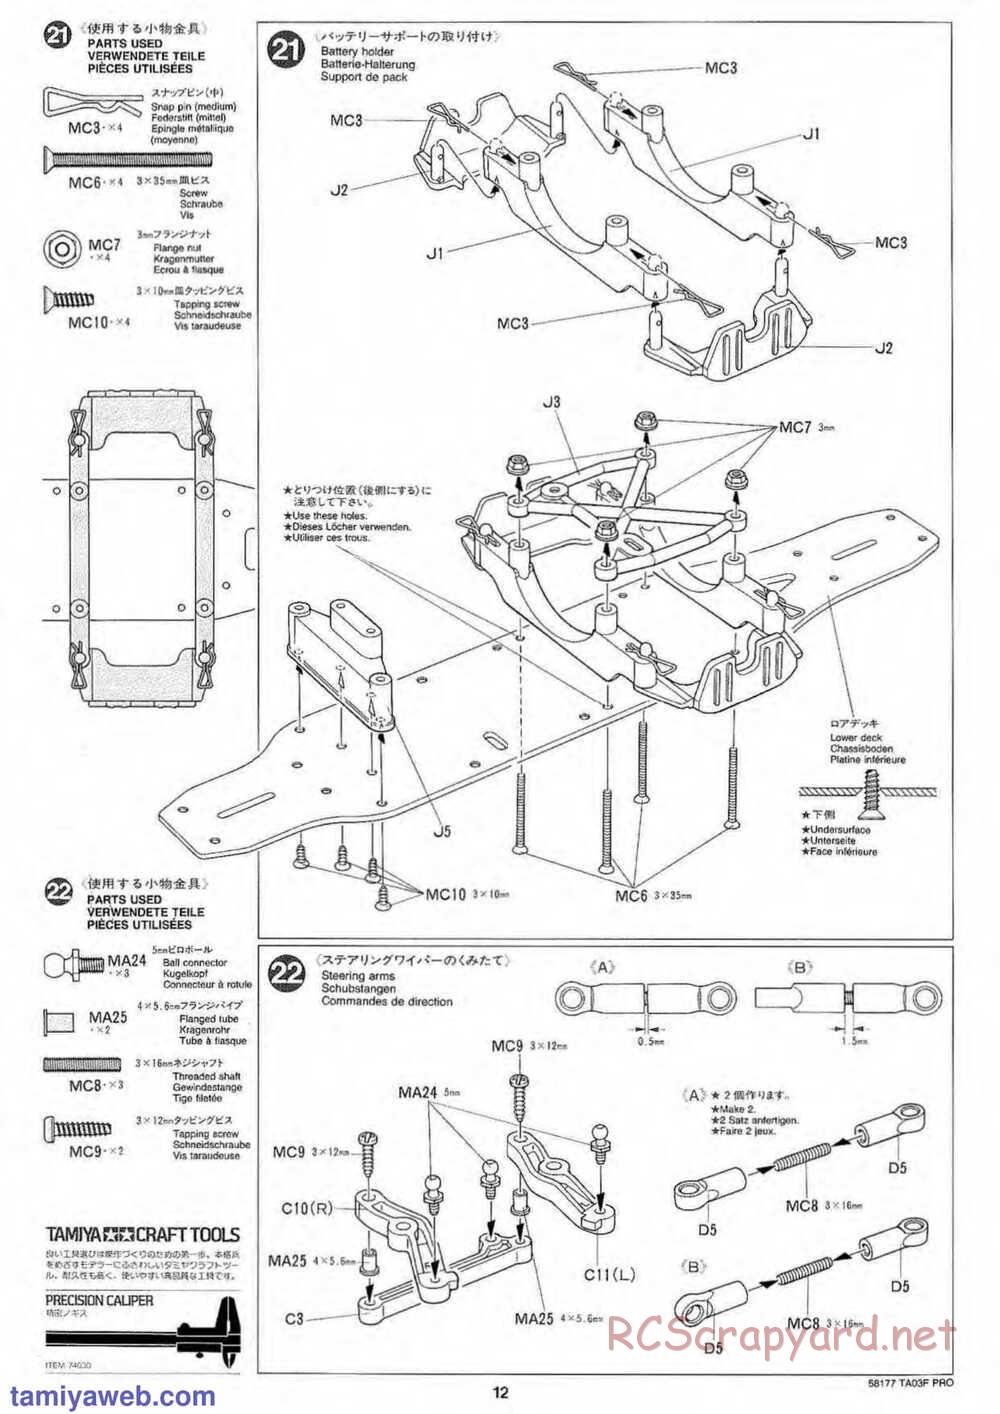 Tamiya - TA-03F Pro Chassis - Manual - Page 12